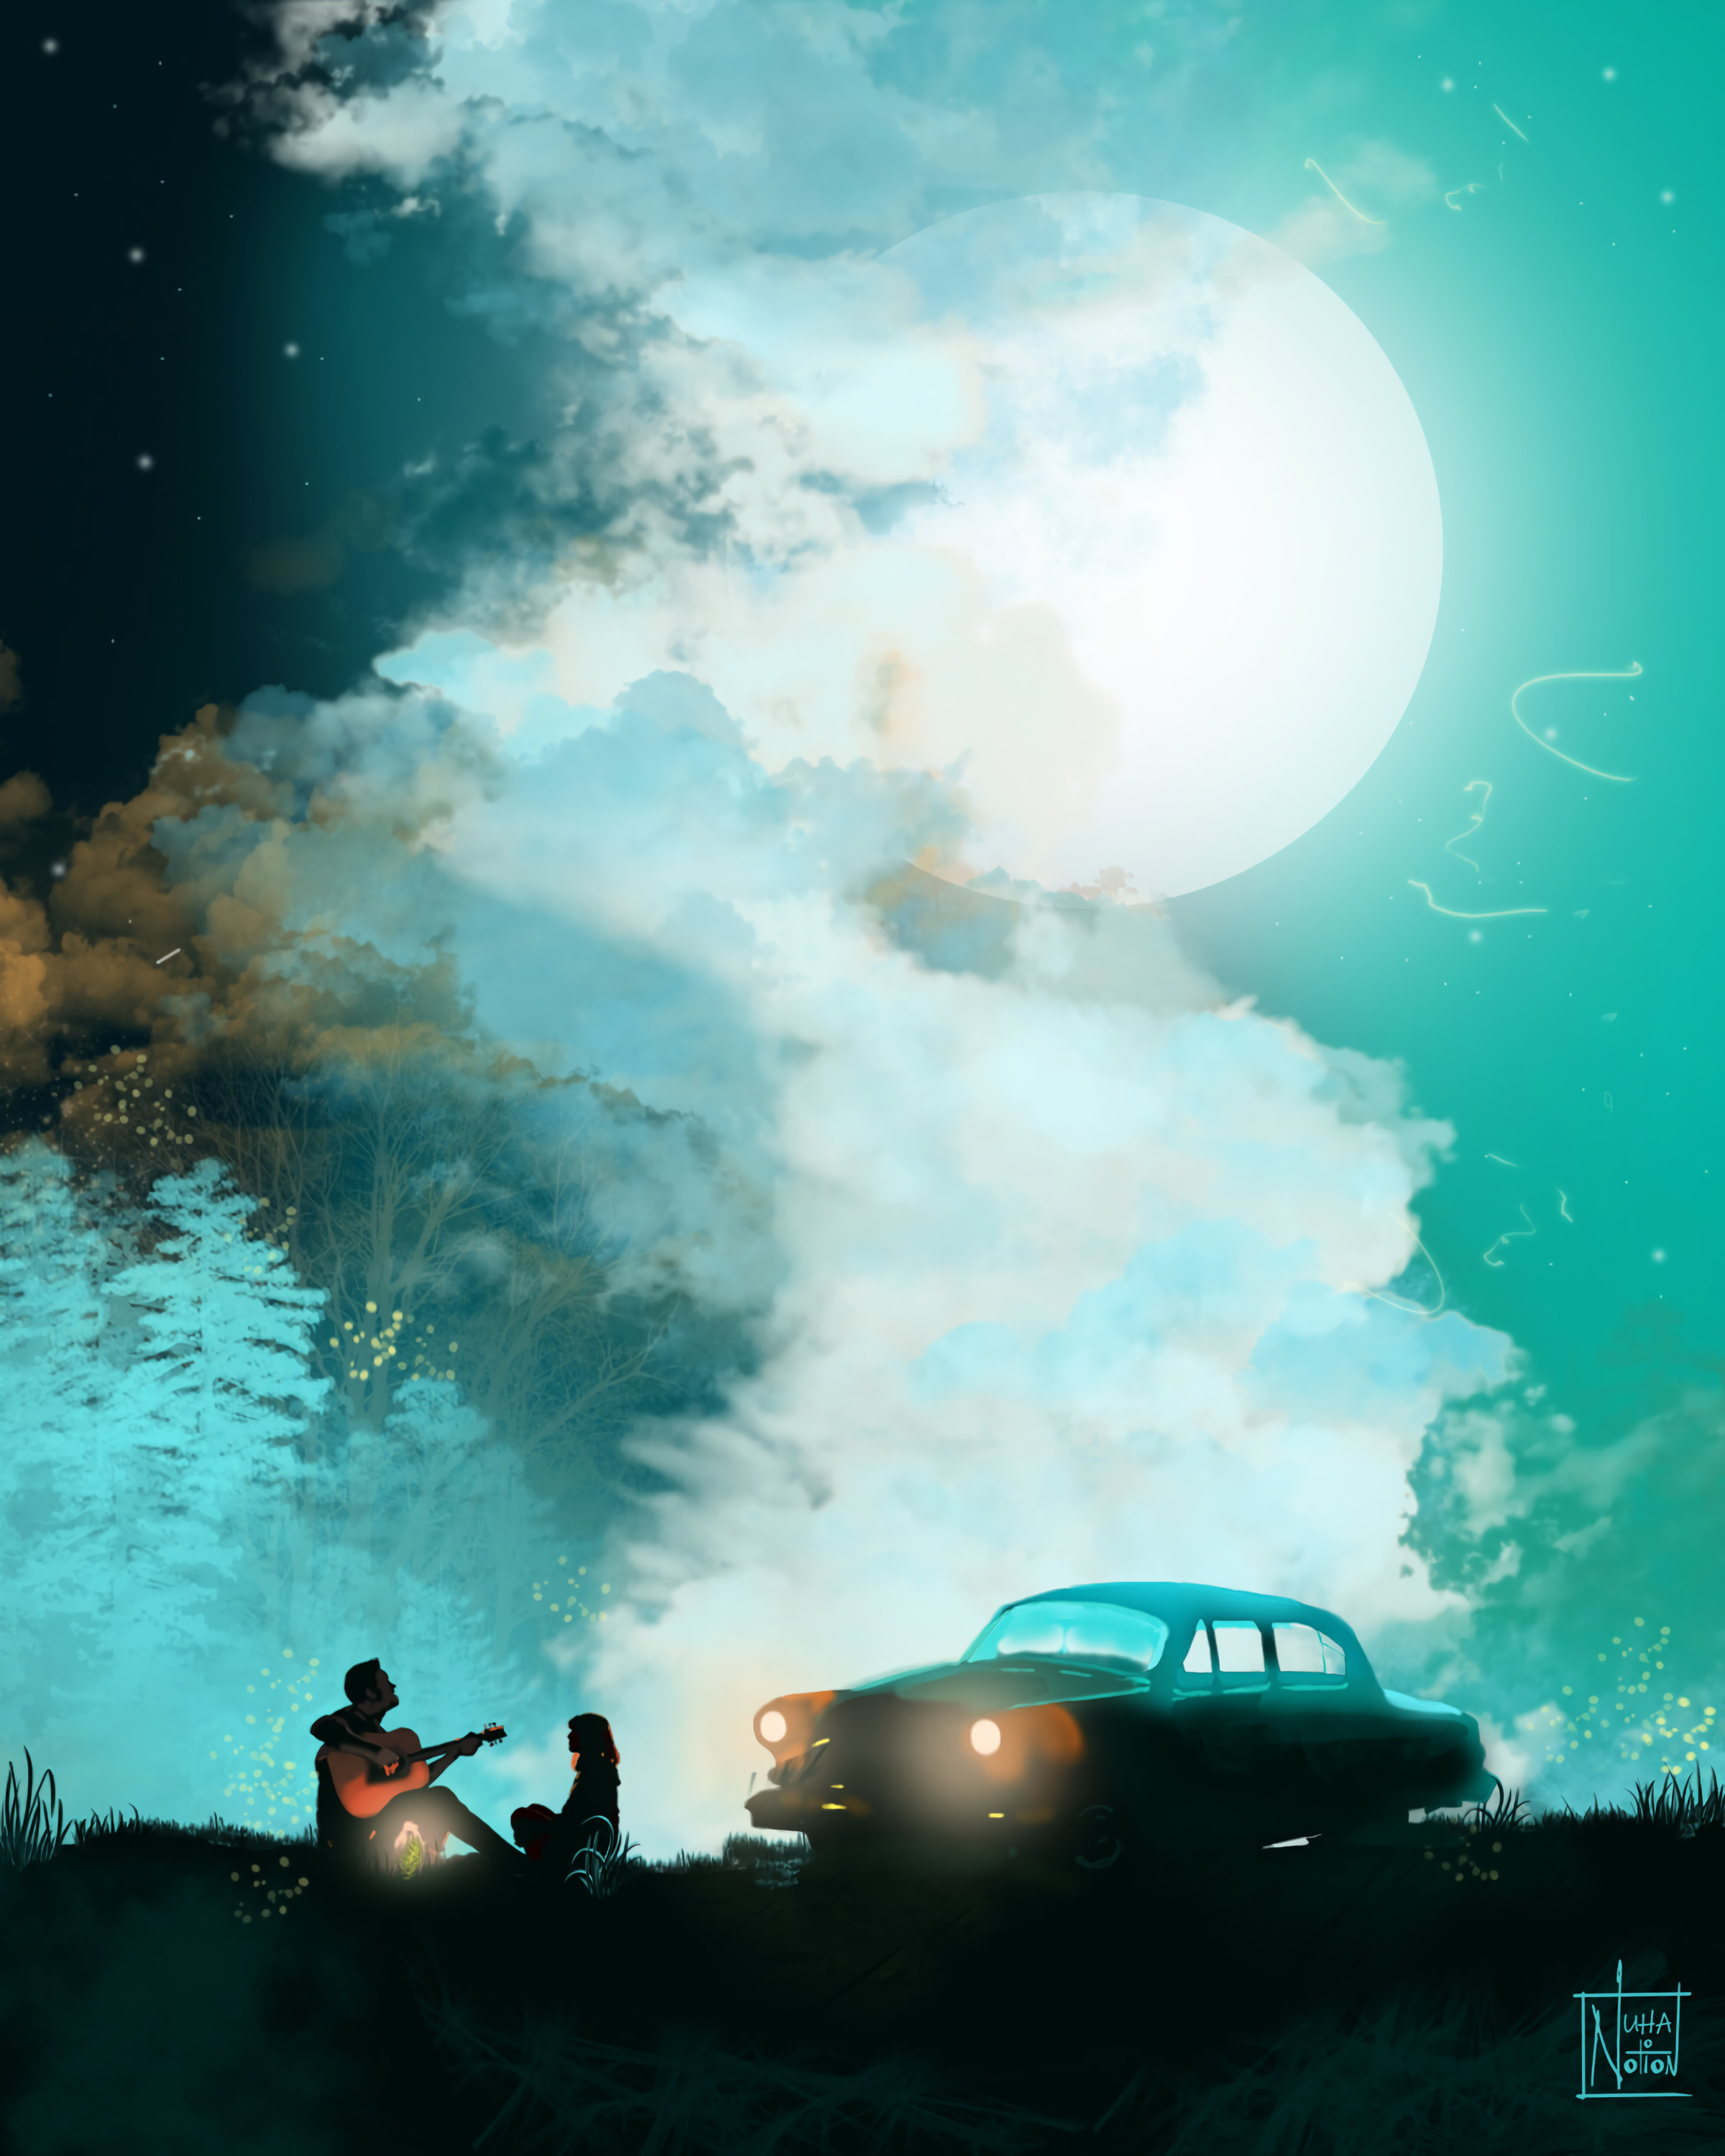 art, guitar, night, moon, silhouettes, car